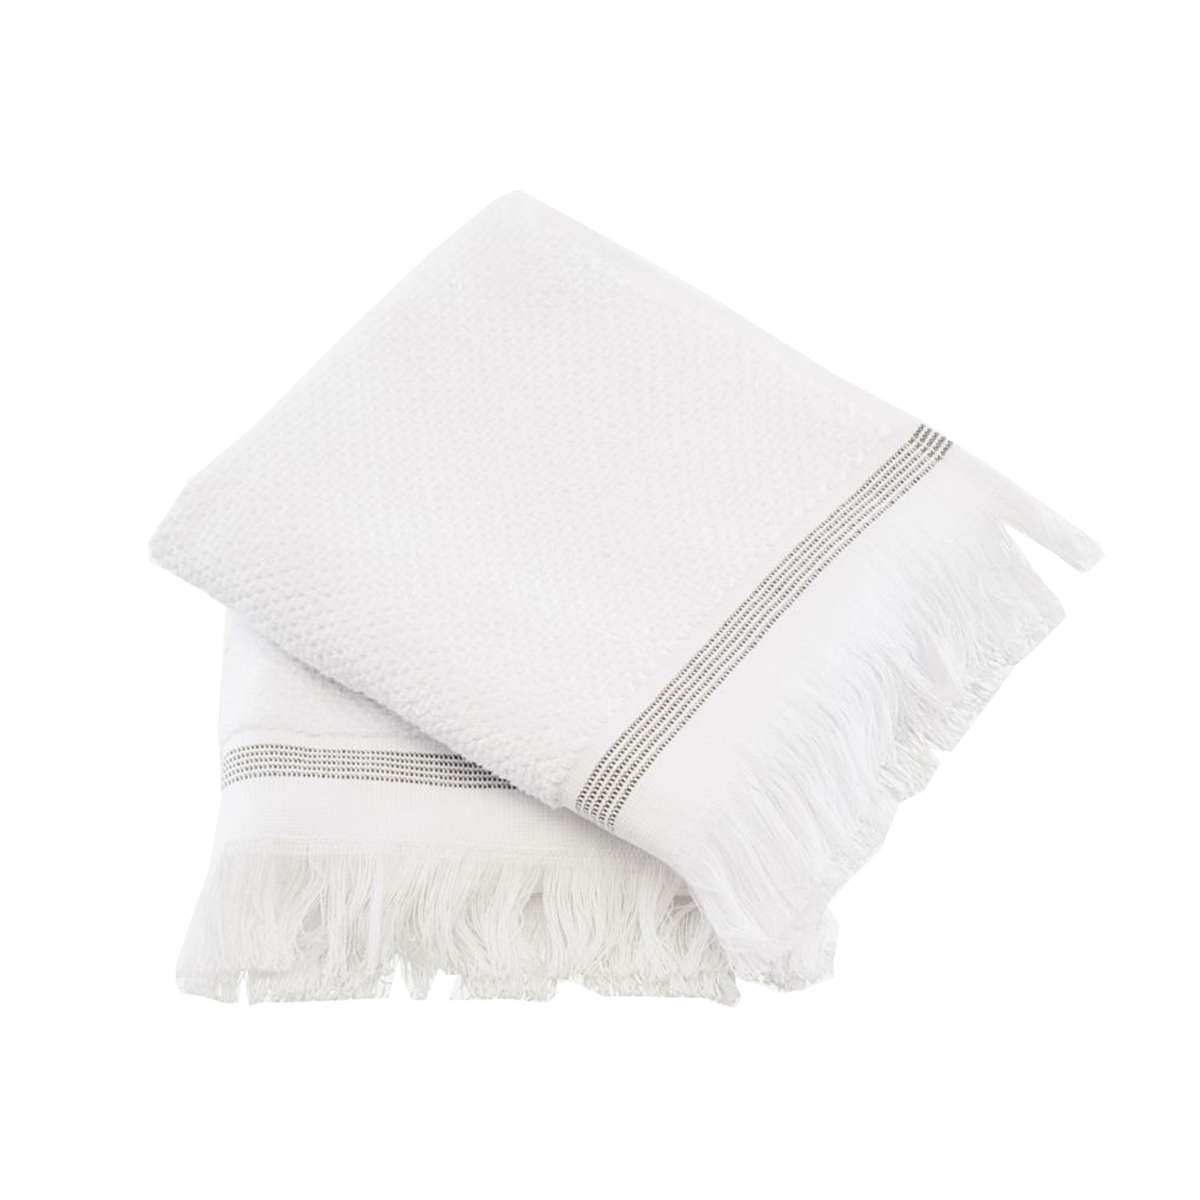 Meraki - Towel 50 x 100 cm 2 pack - White/Grey Stripe (Mkds03/357780003)